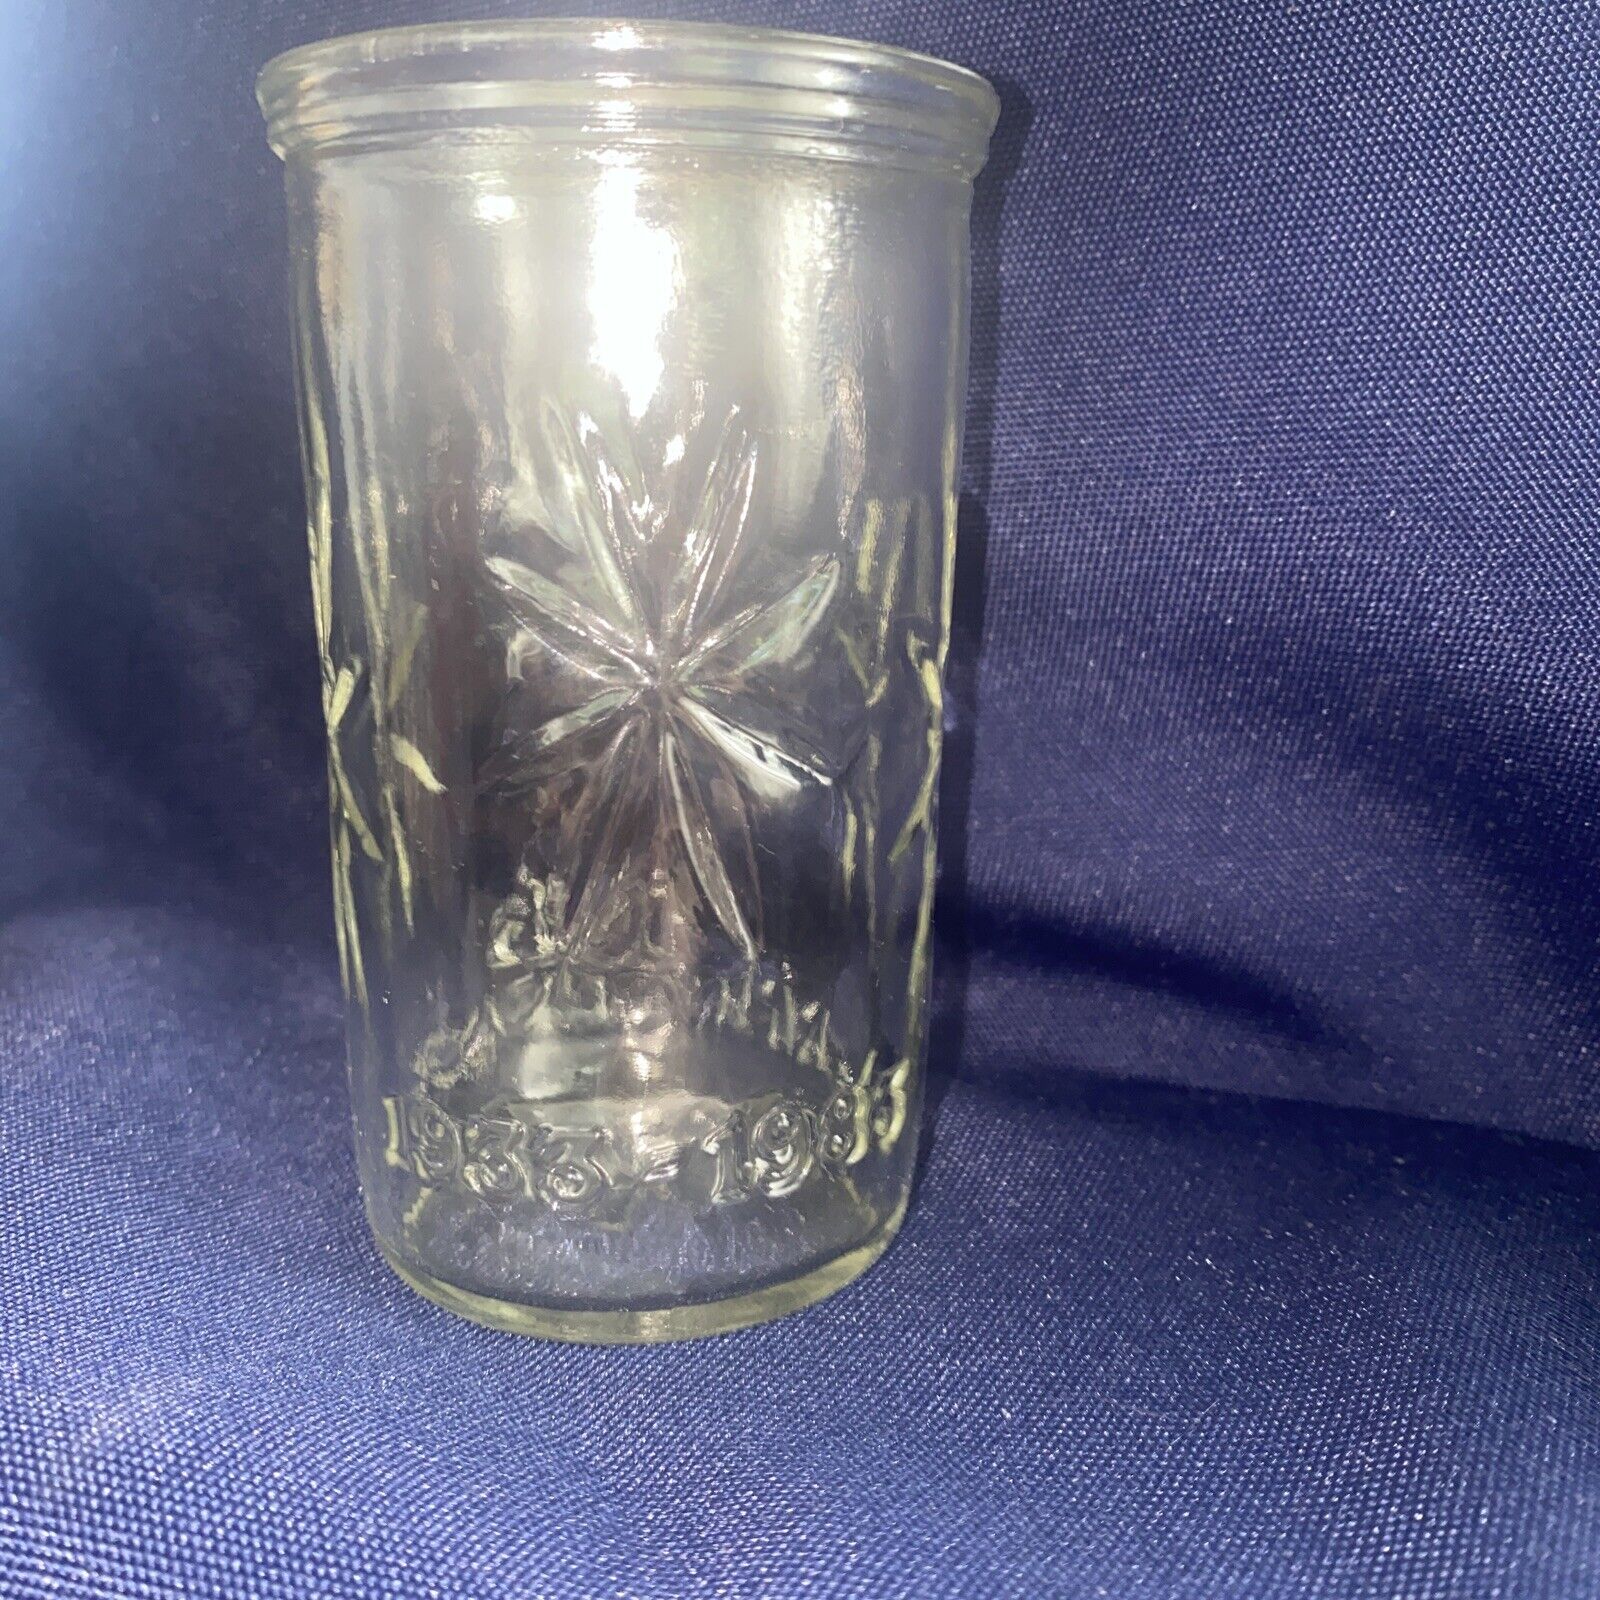 Vintage Jelly Jar Juice Glass - Atomic Star Burst Design